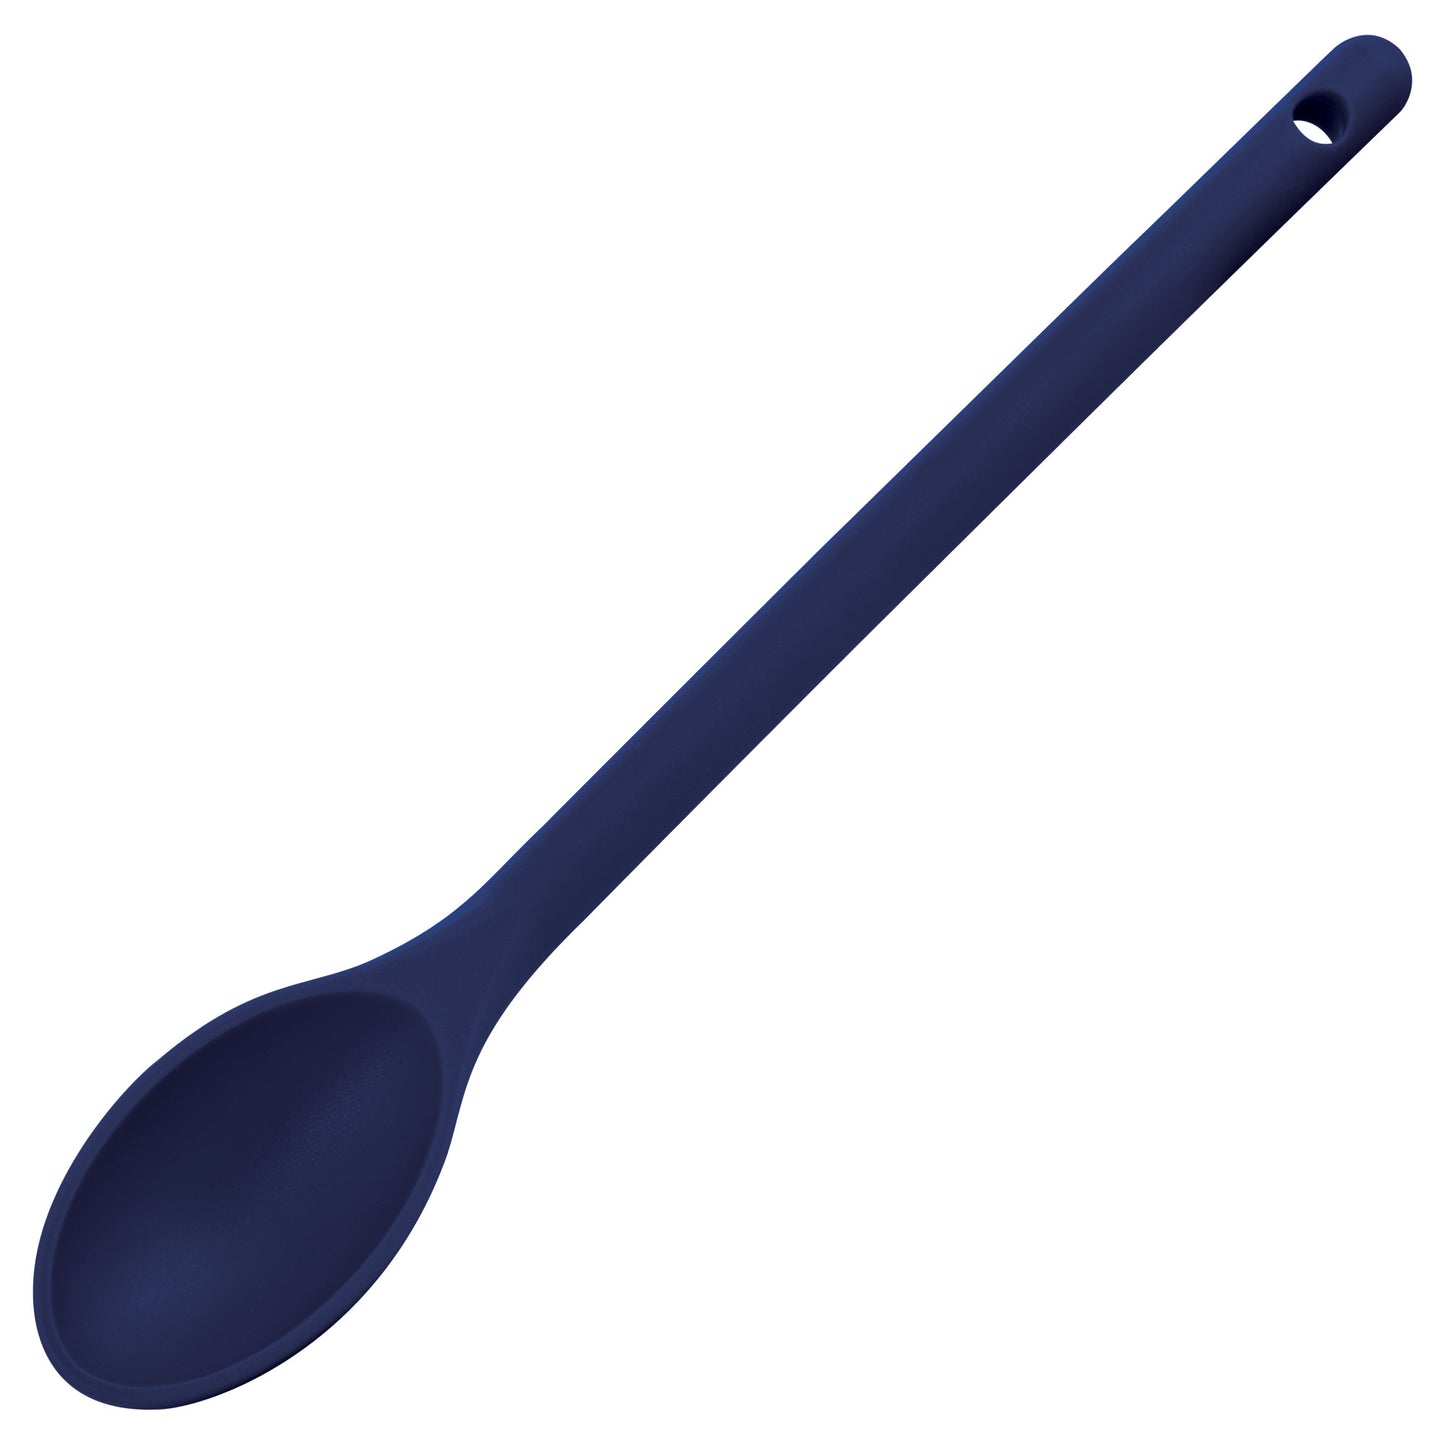 NS-12B - High Heat Nylon Spoon - 12", Blue